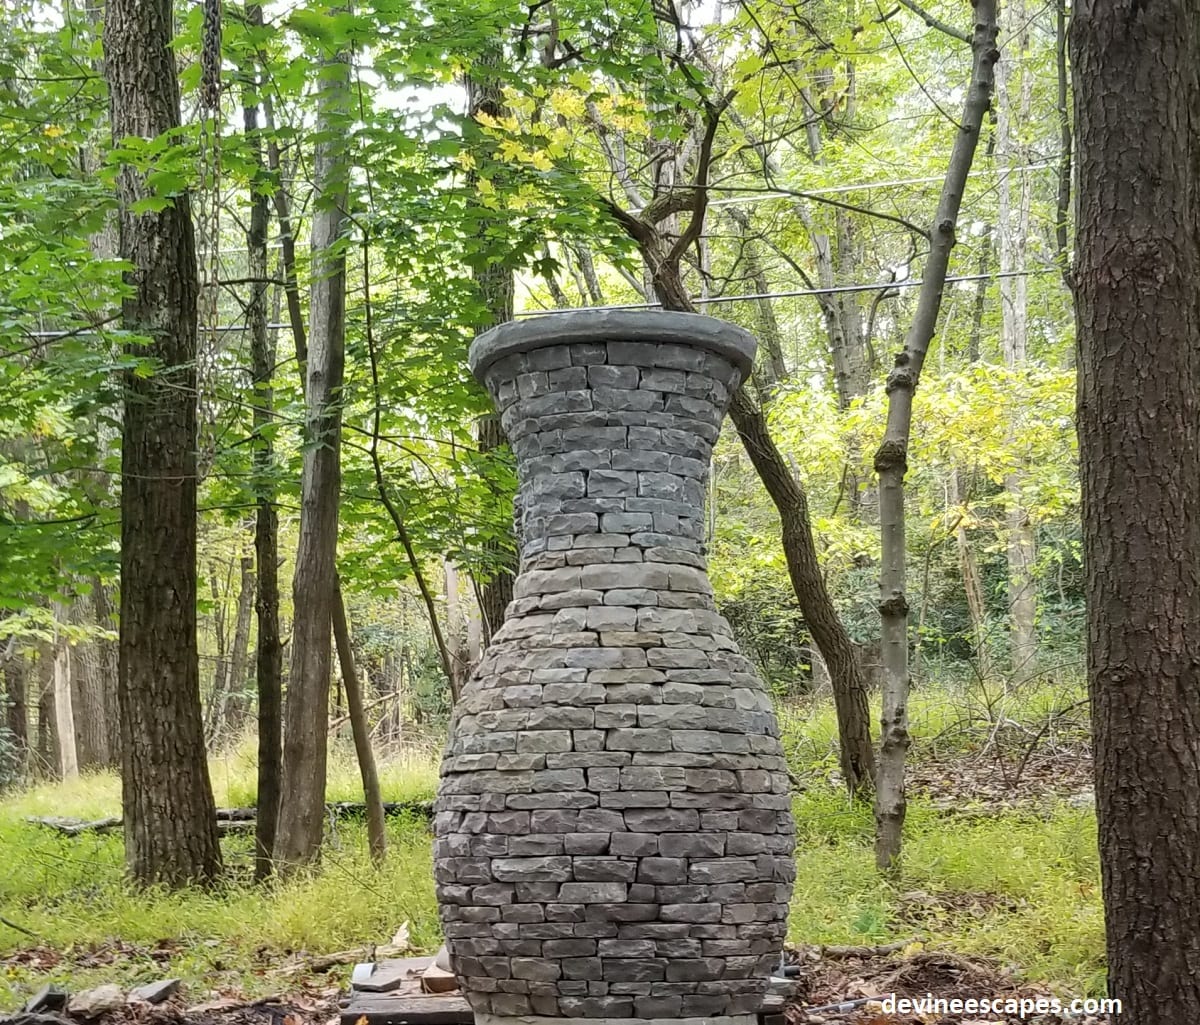 stacked stone vase